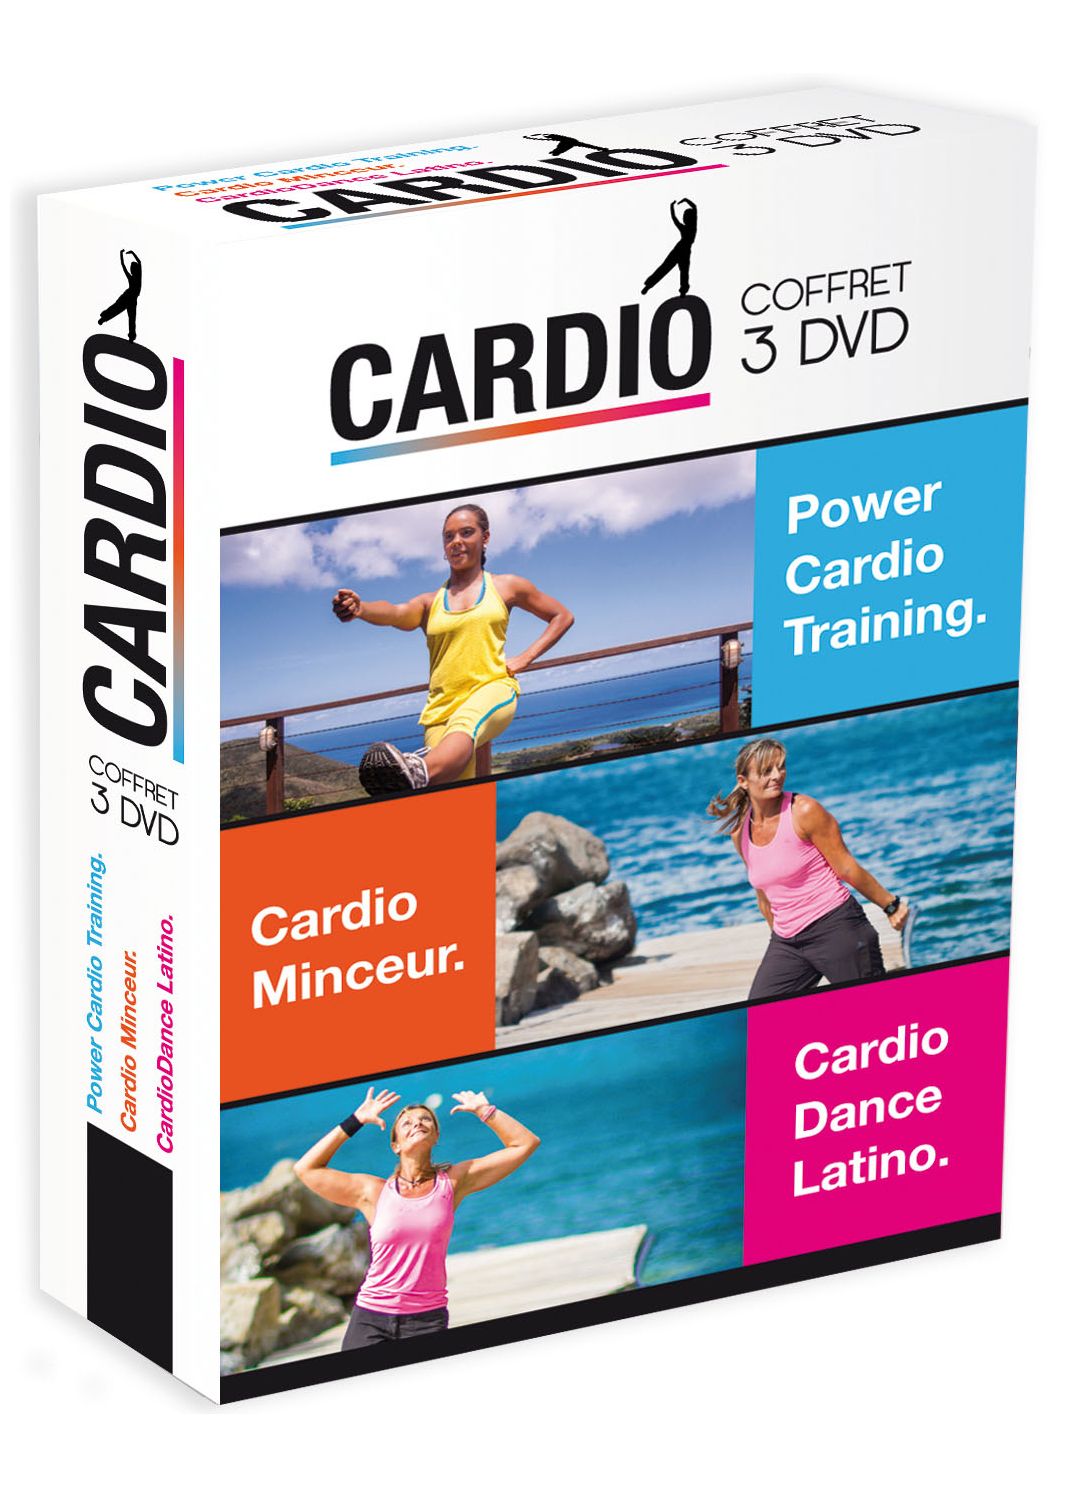 Coffret Cardio : Power Cardio Training  Cardio Minceur  Cardio Dance Latino [DVD]